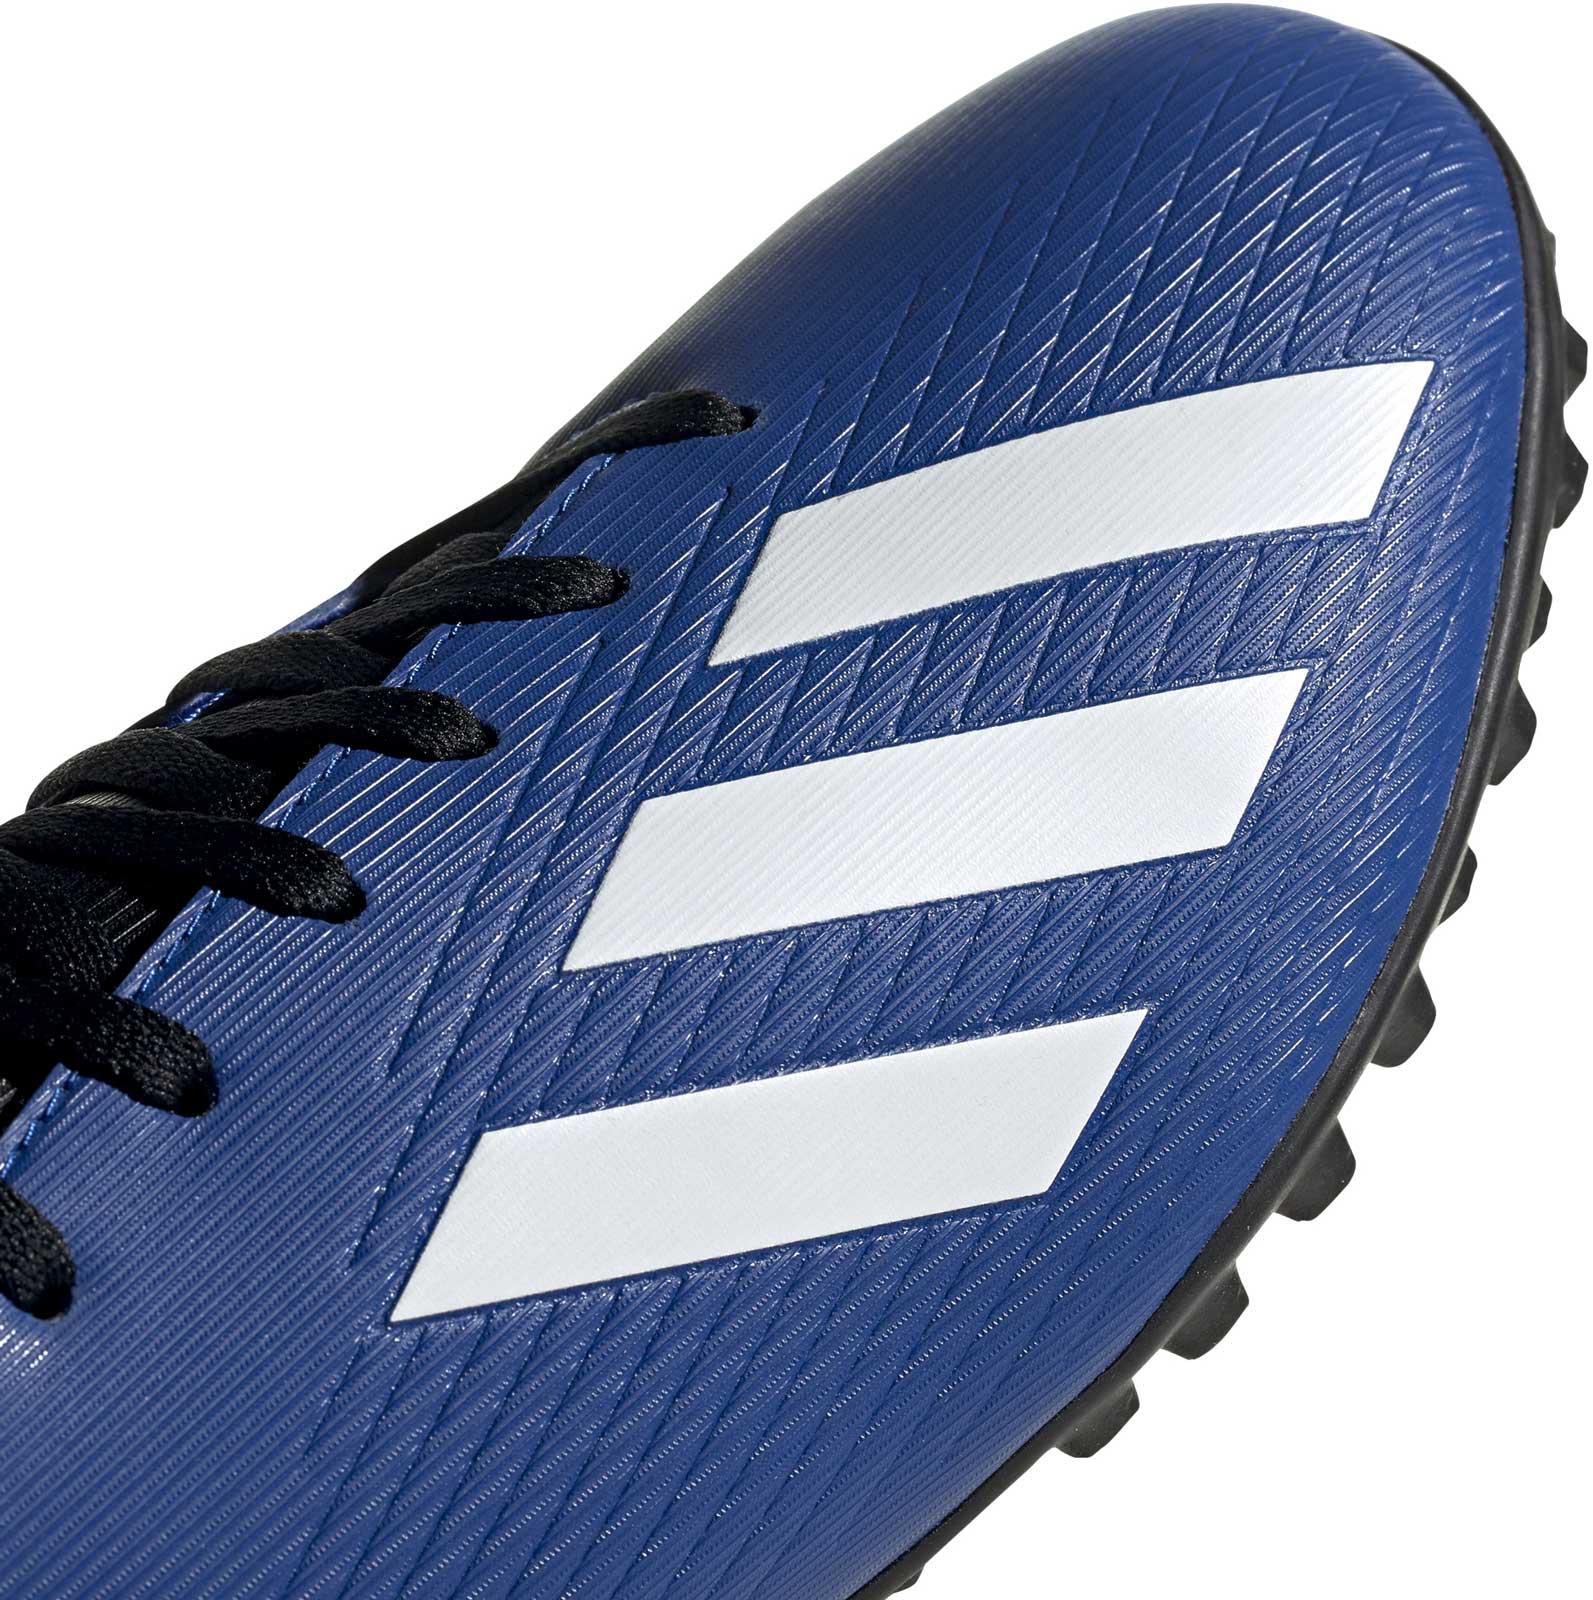 Men's turf football shoes